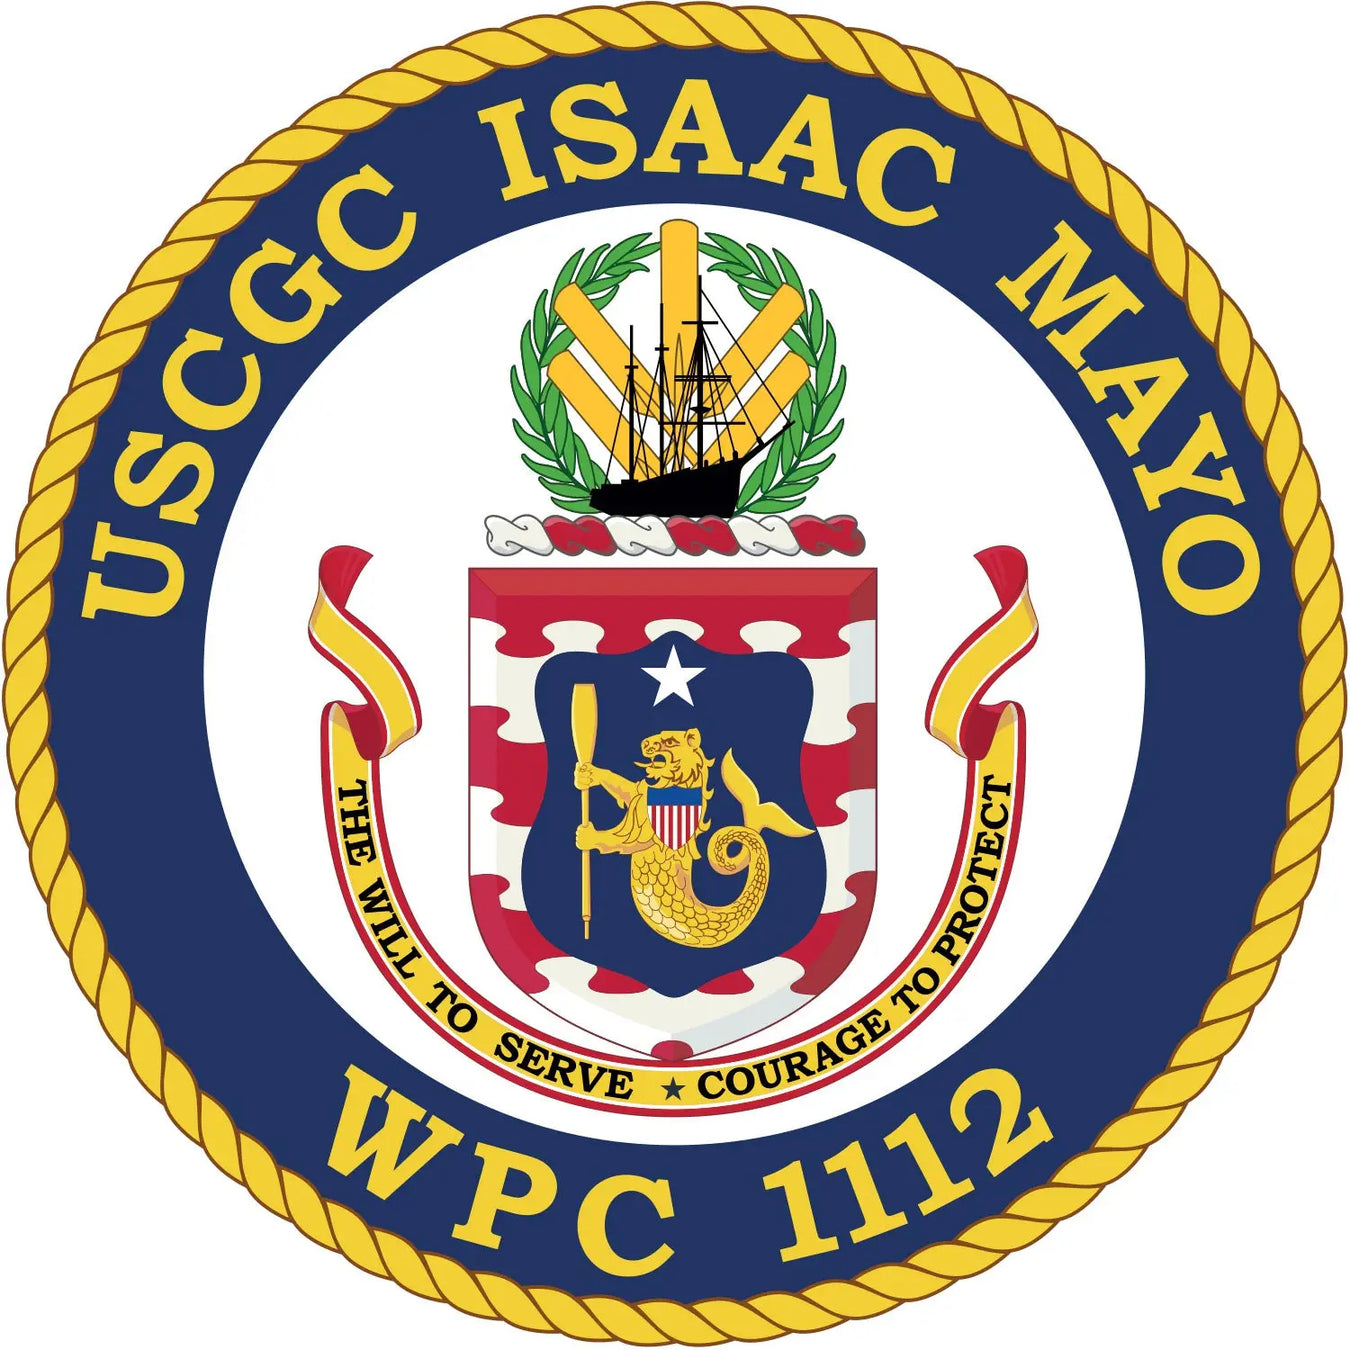 USCGC Issac Mayo (WPC-1112)